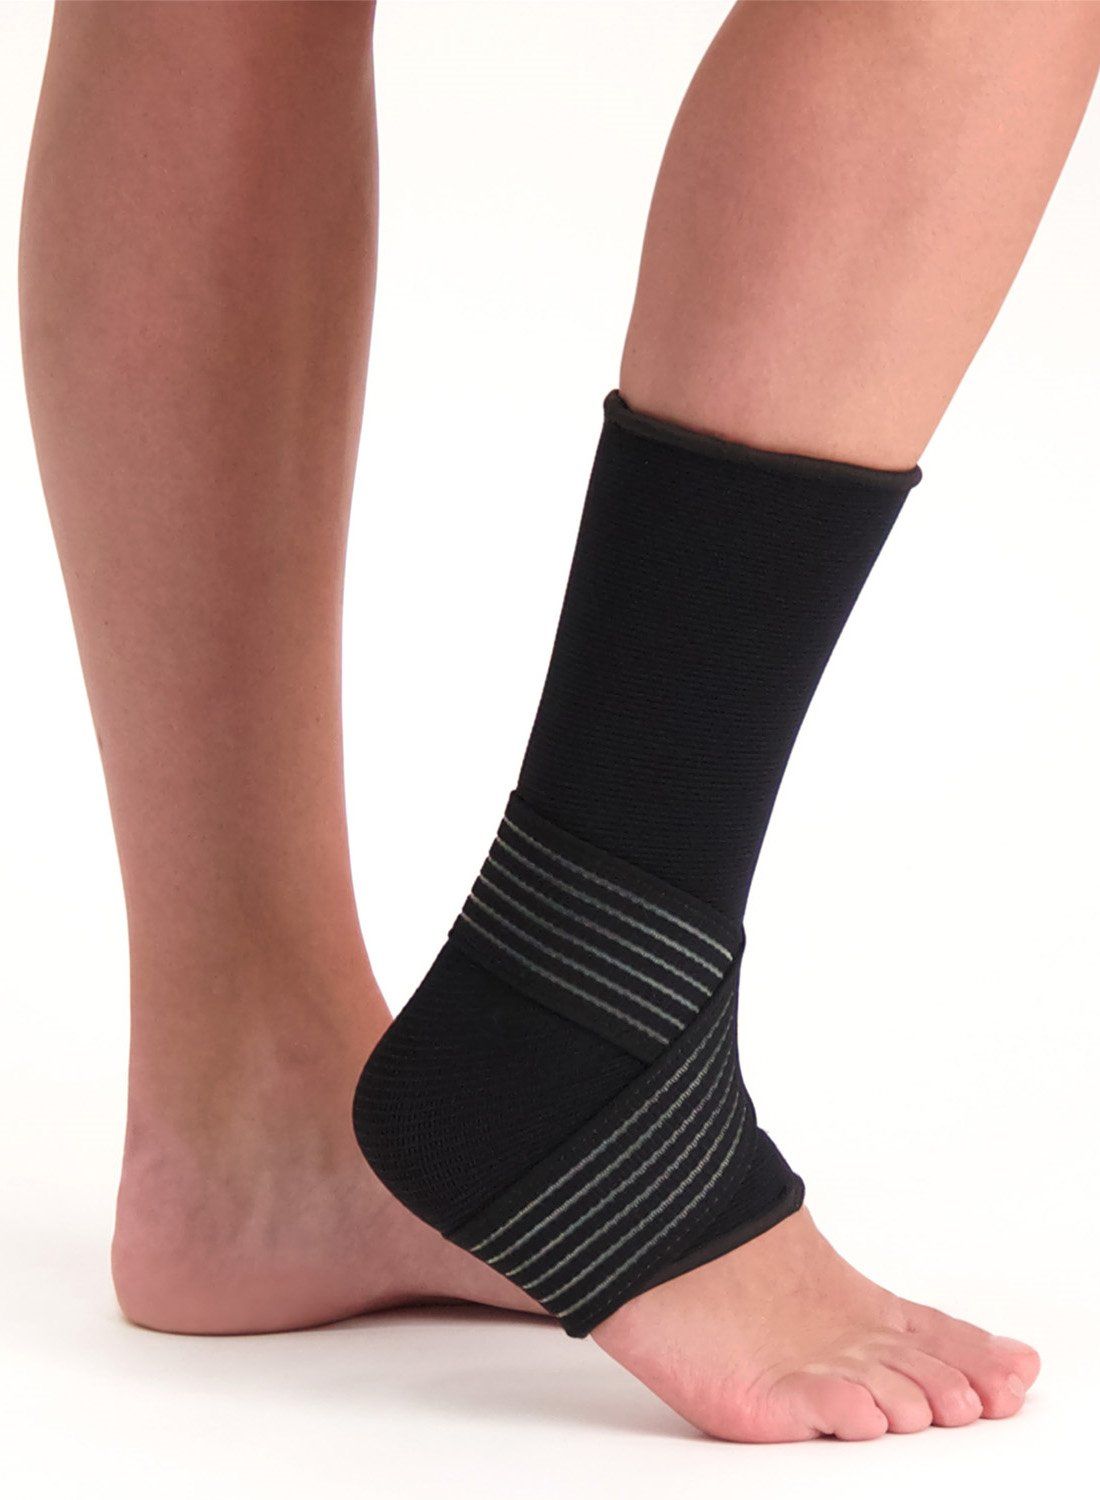 medidu premium ankle support for sale